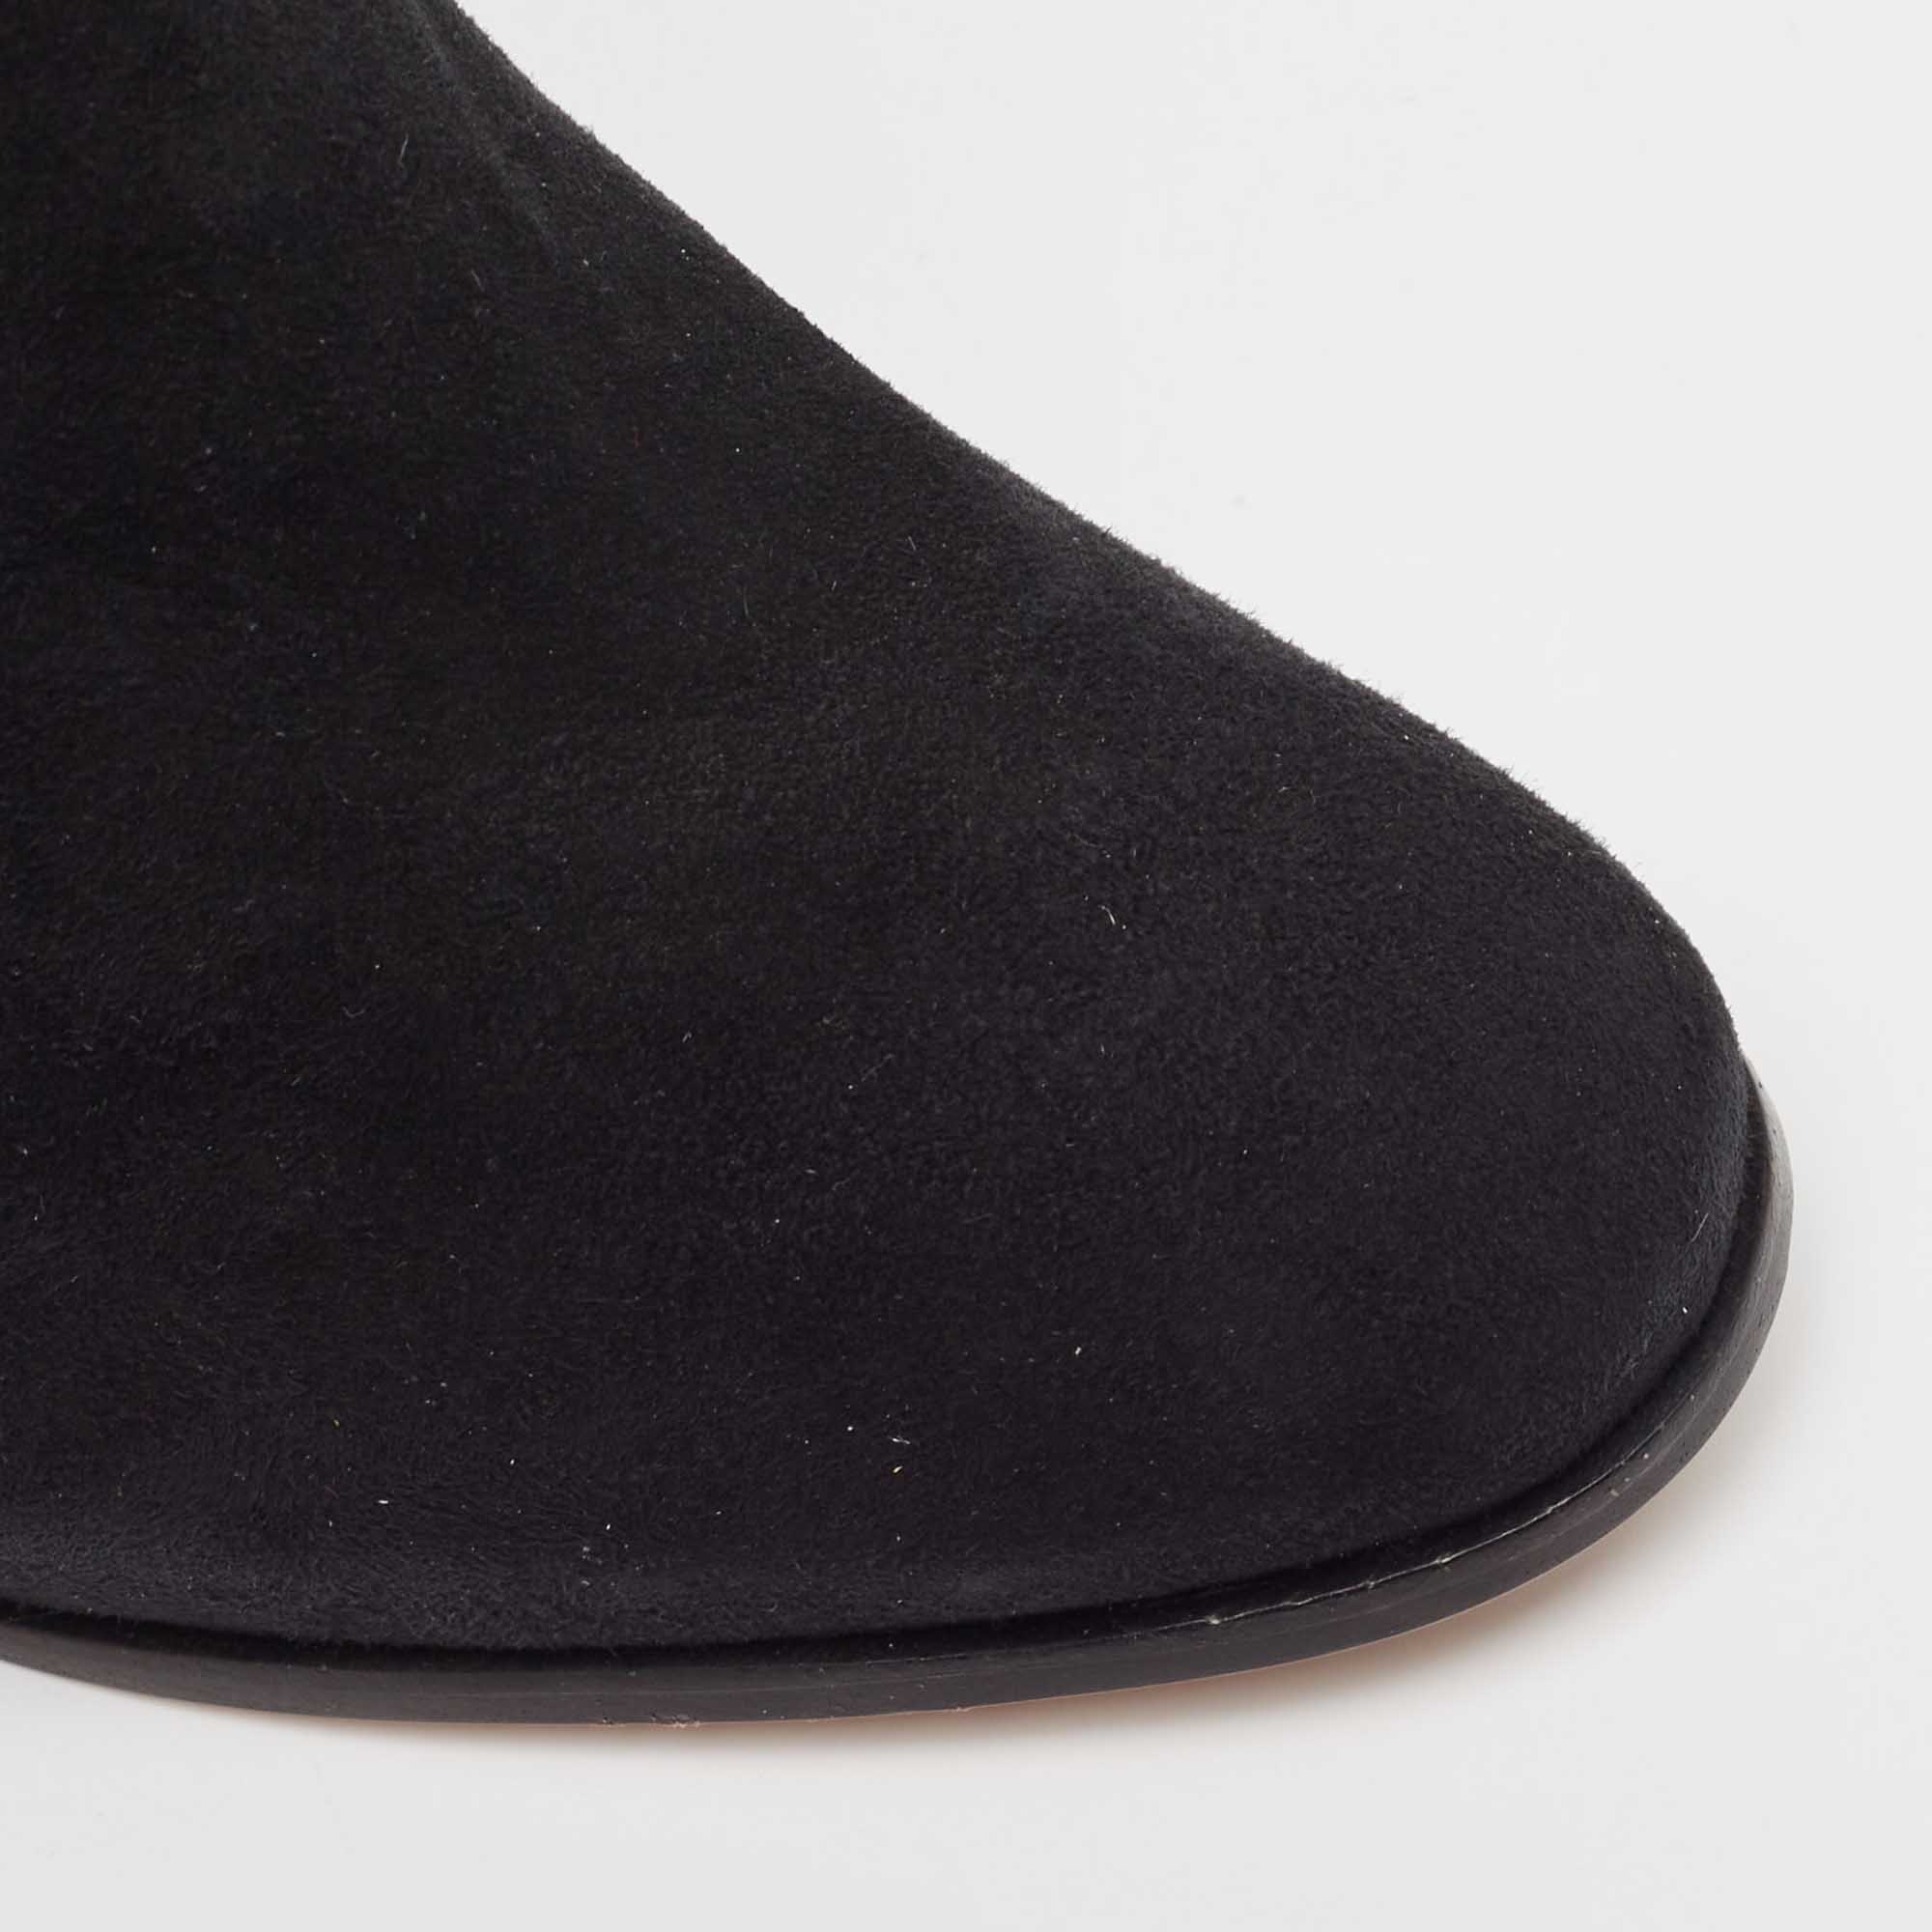 Sophia Webster Black Suede Felicity Ankle Boots Size 41.5